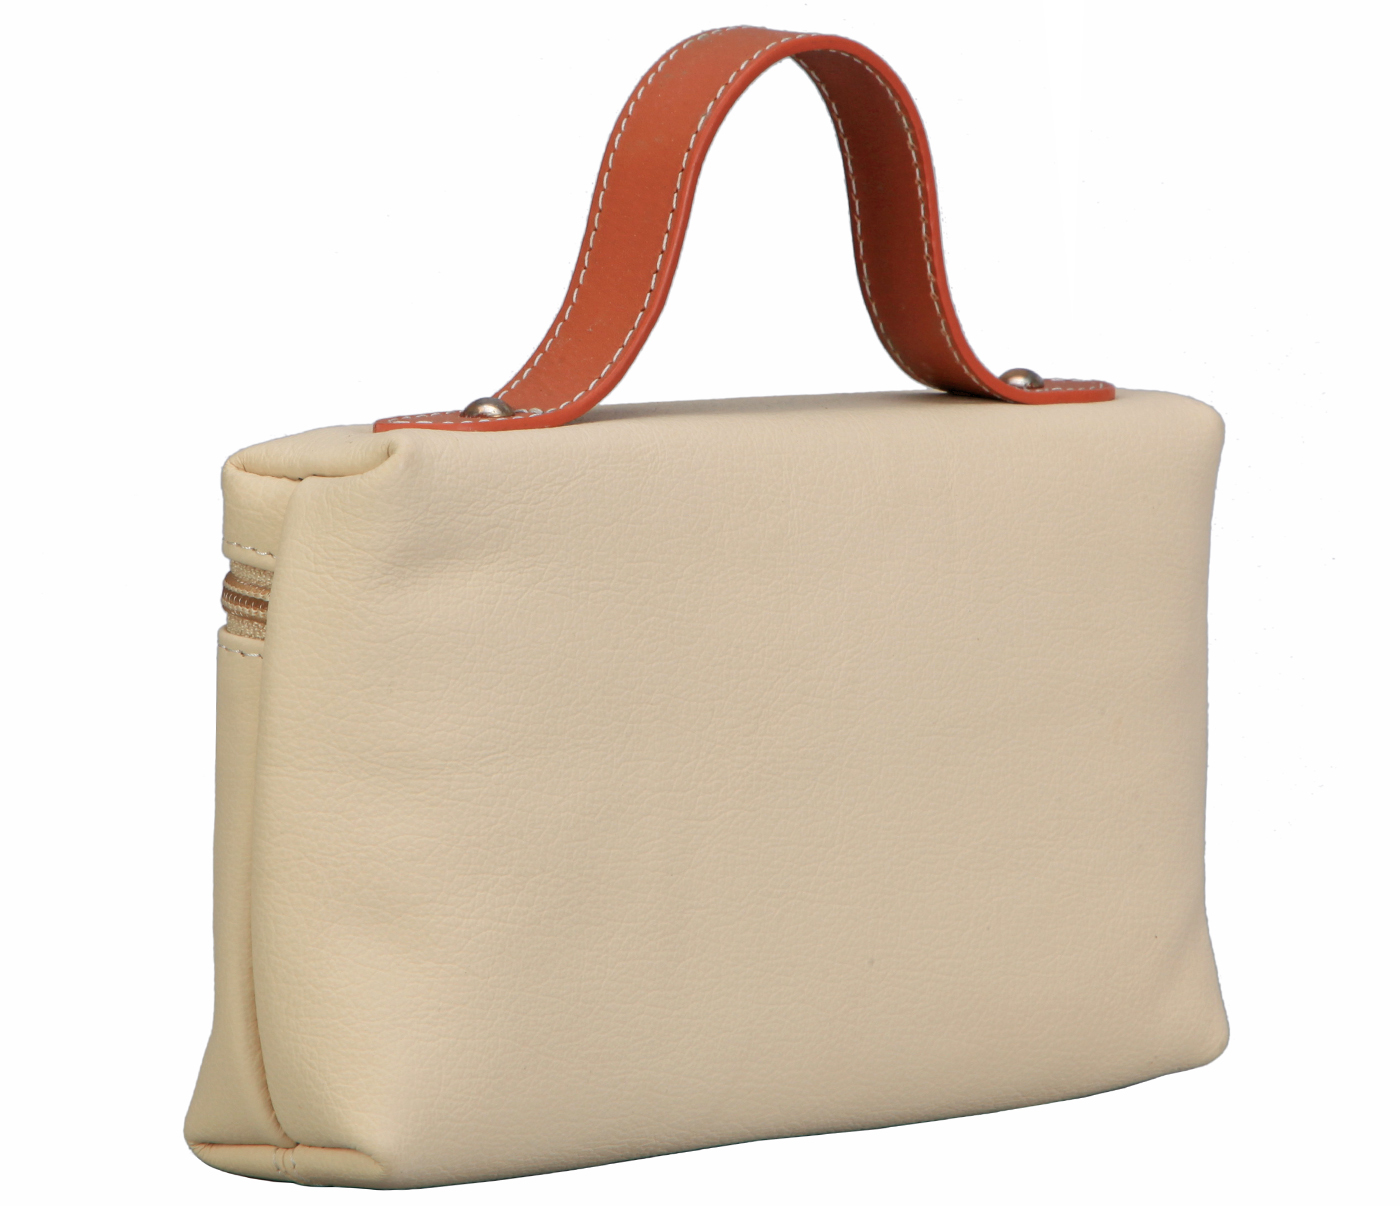 B865-Florencia-Shoulder work bag in Genuine Leather - Offwhite